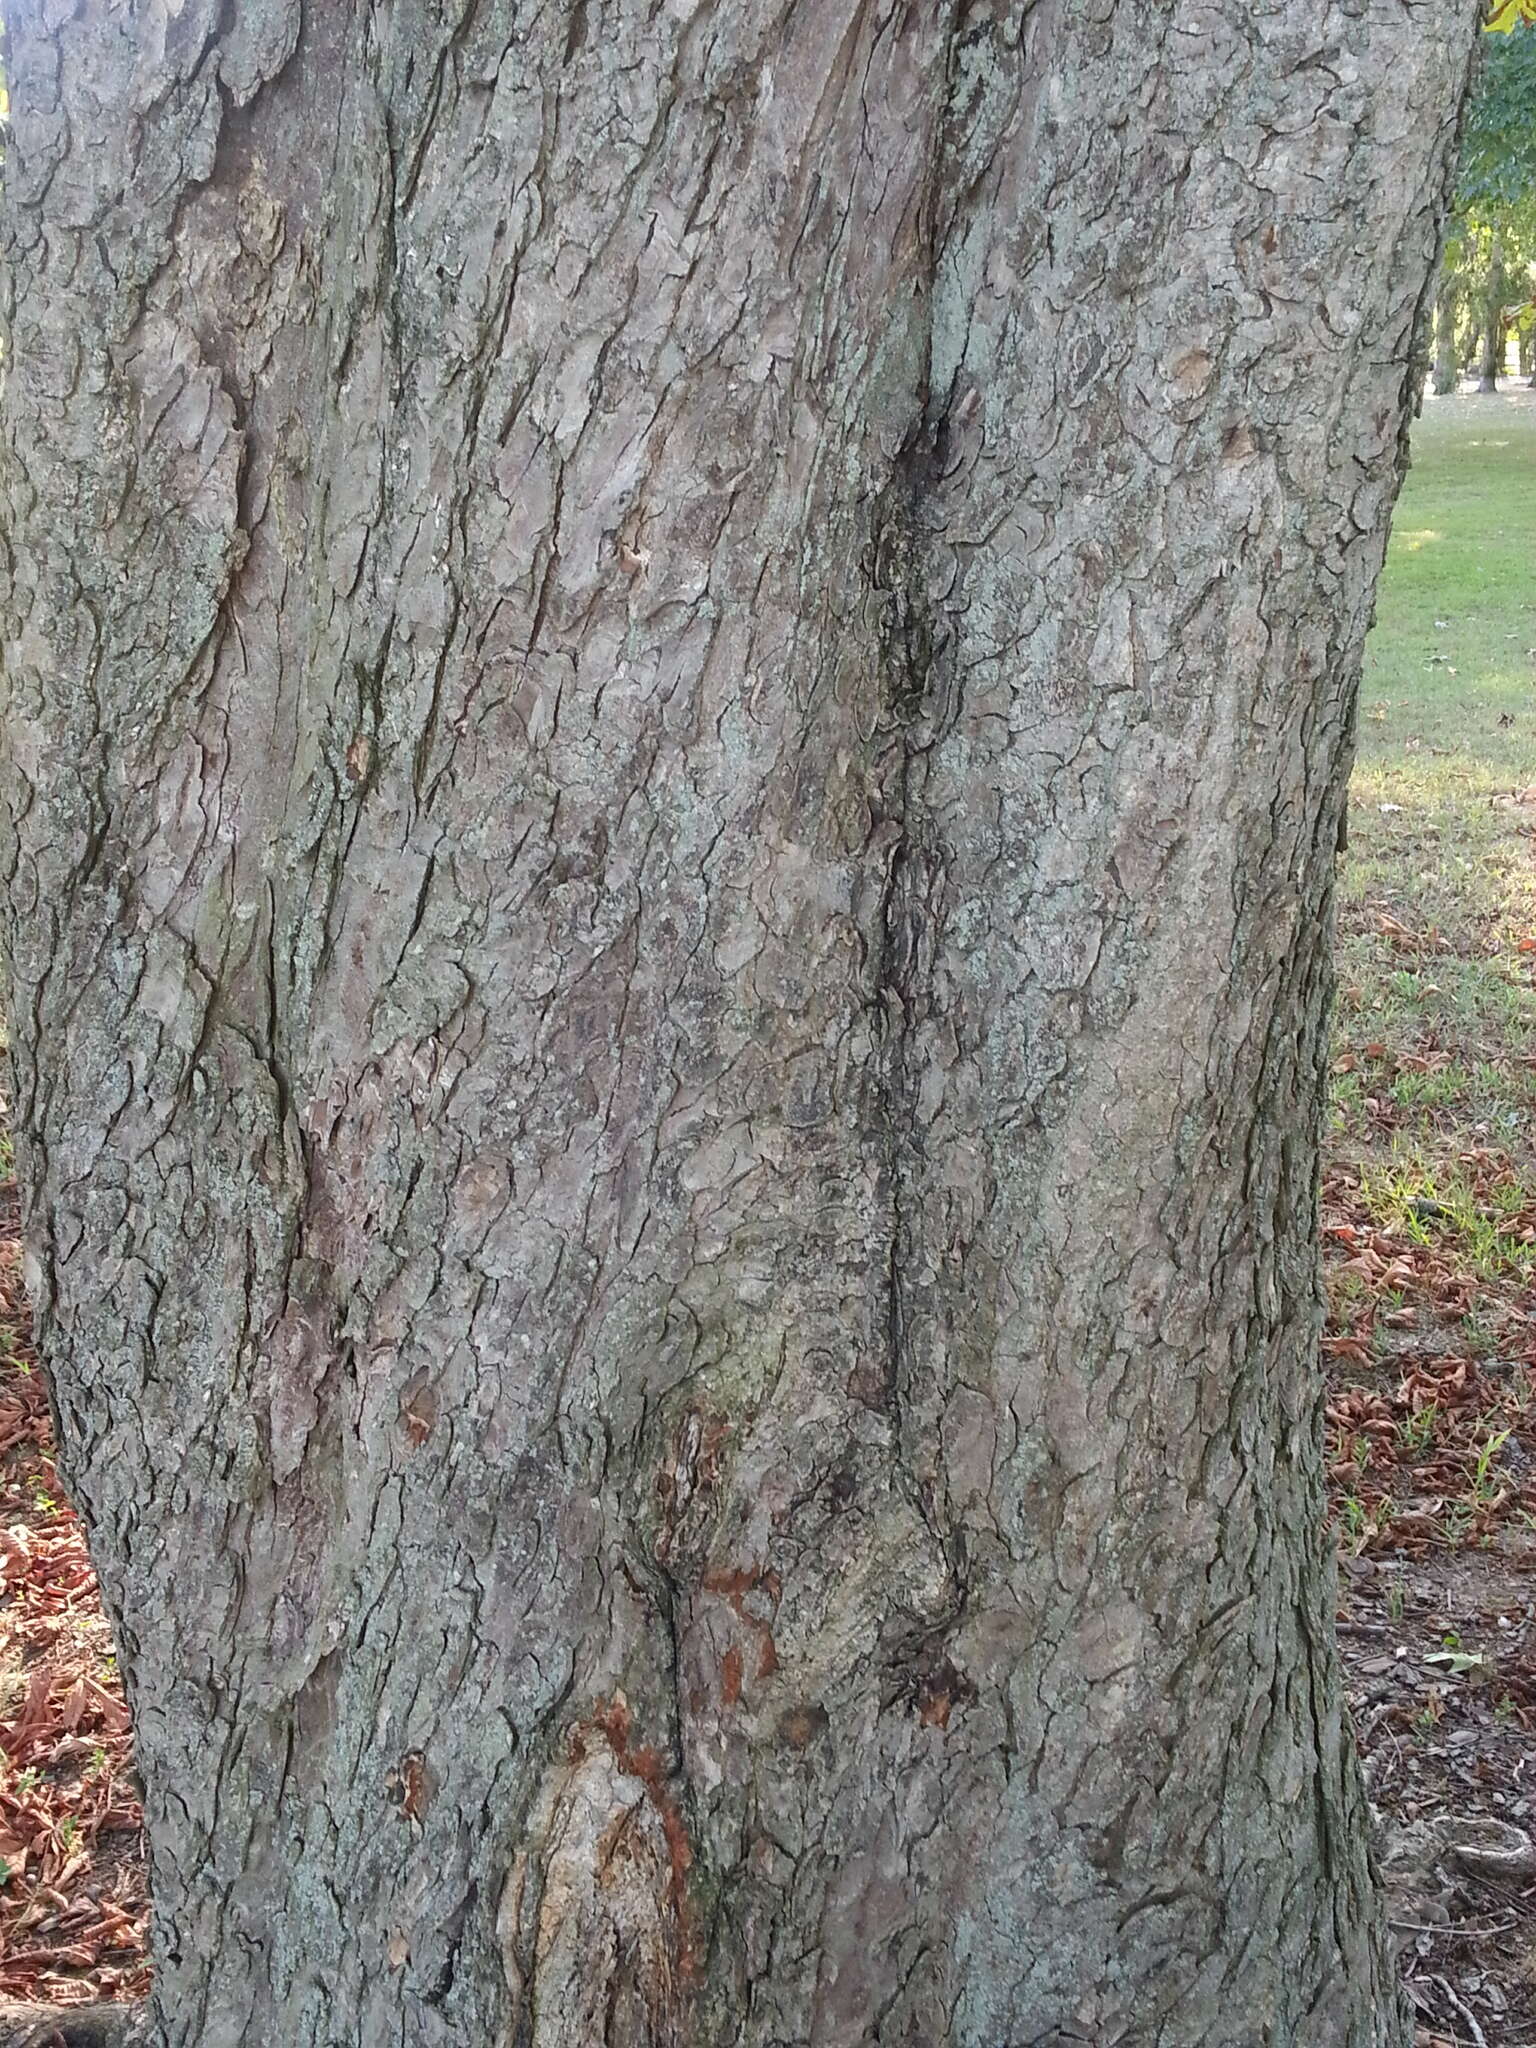 Image of European horse chestnut